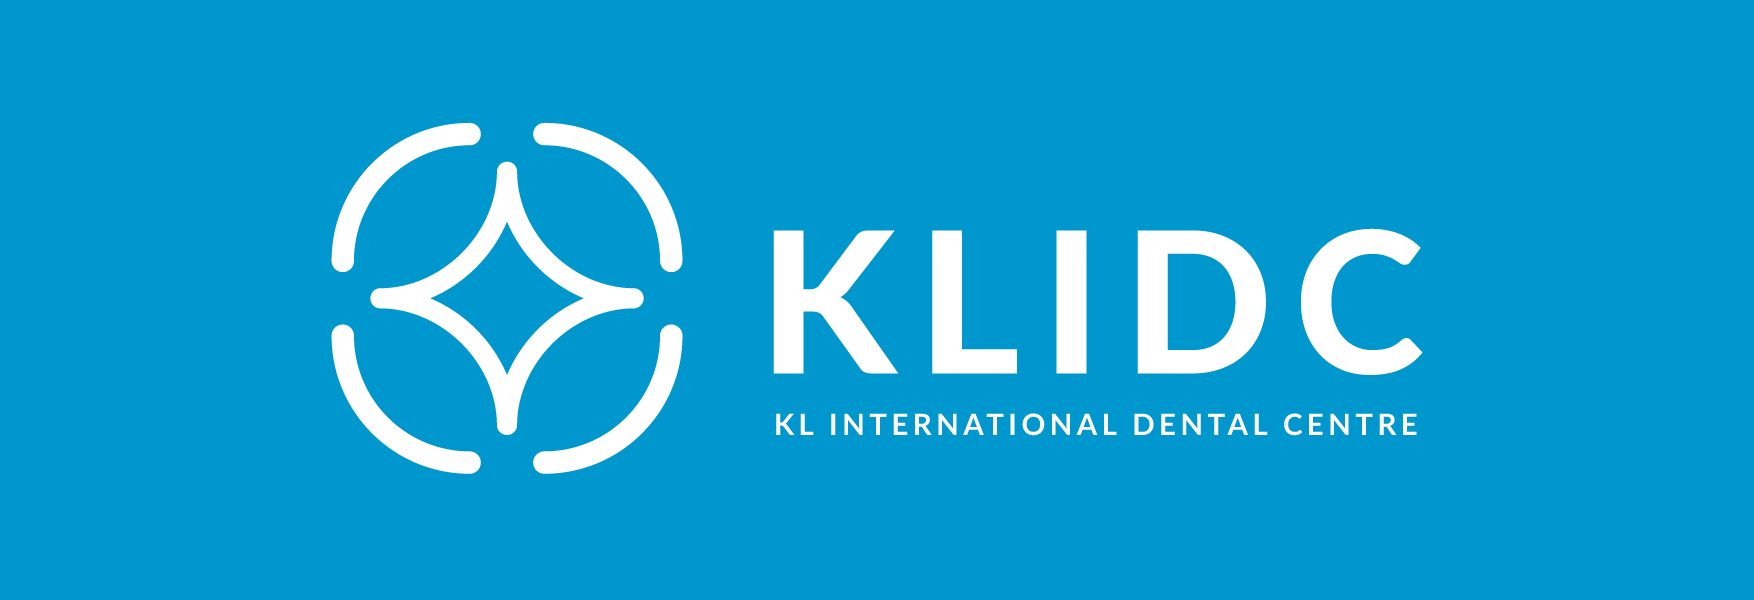 KLIDC-Branding-Mockup-02